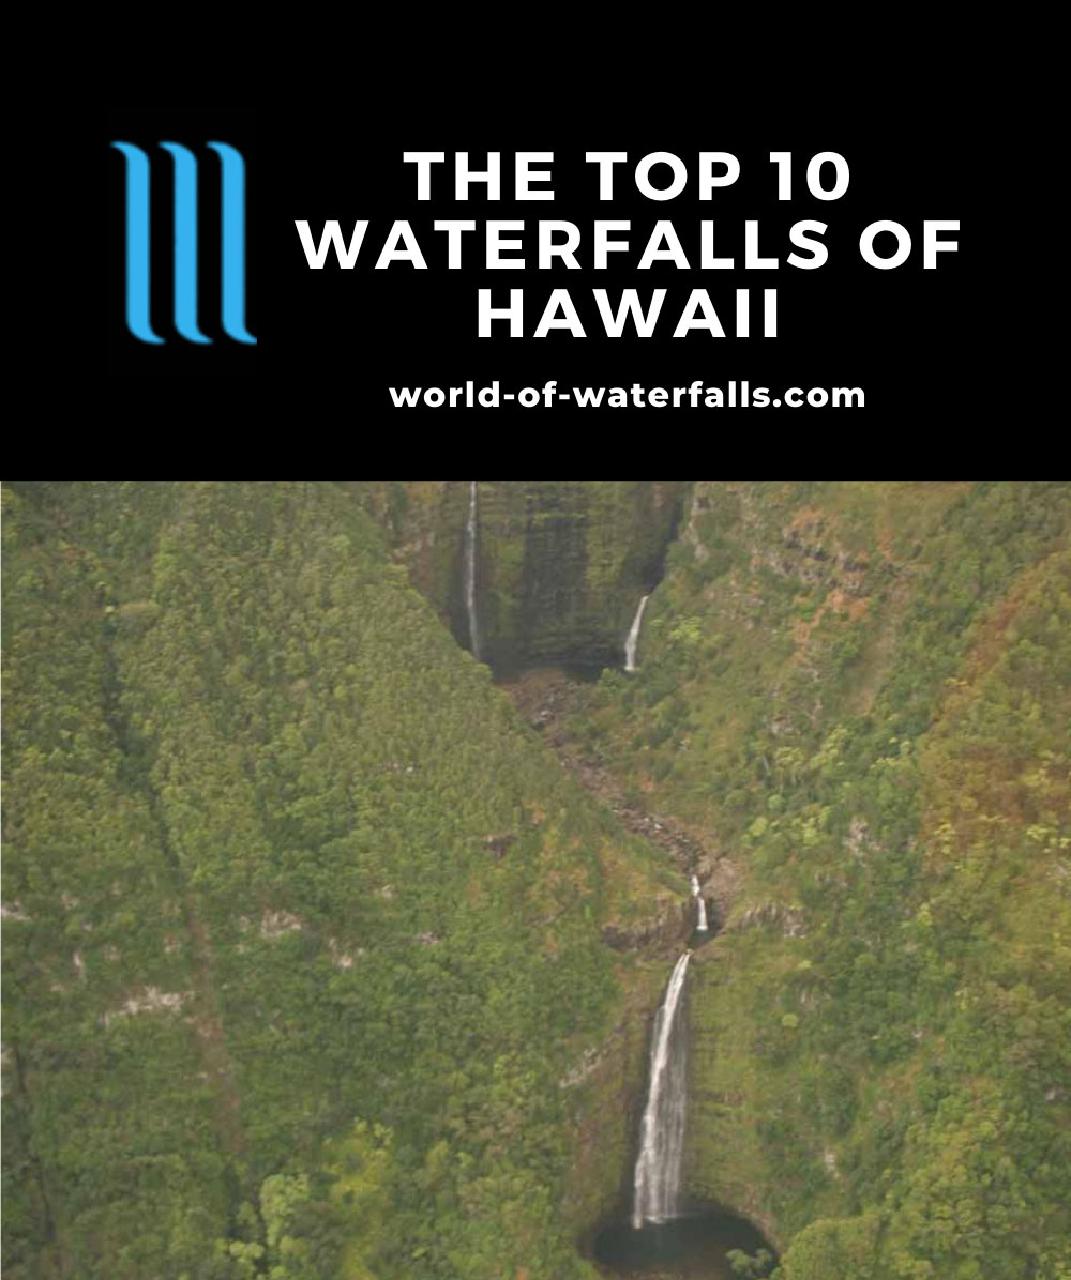 The Top 10 Waterfalls of Hawaii